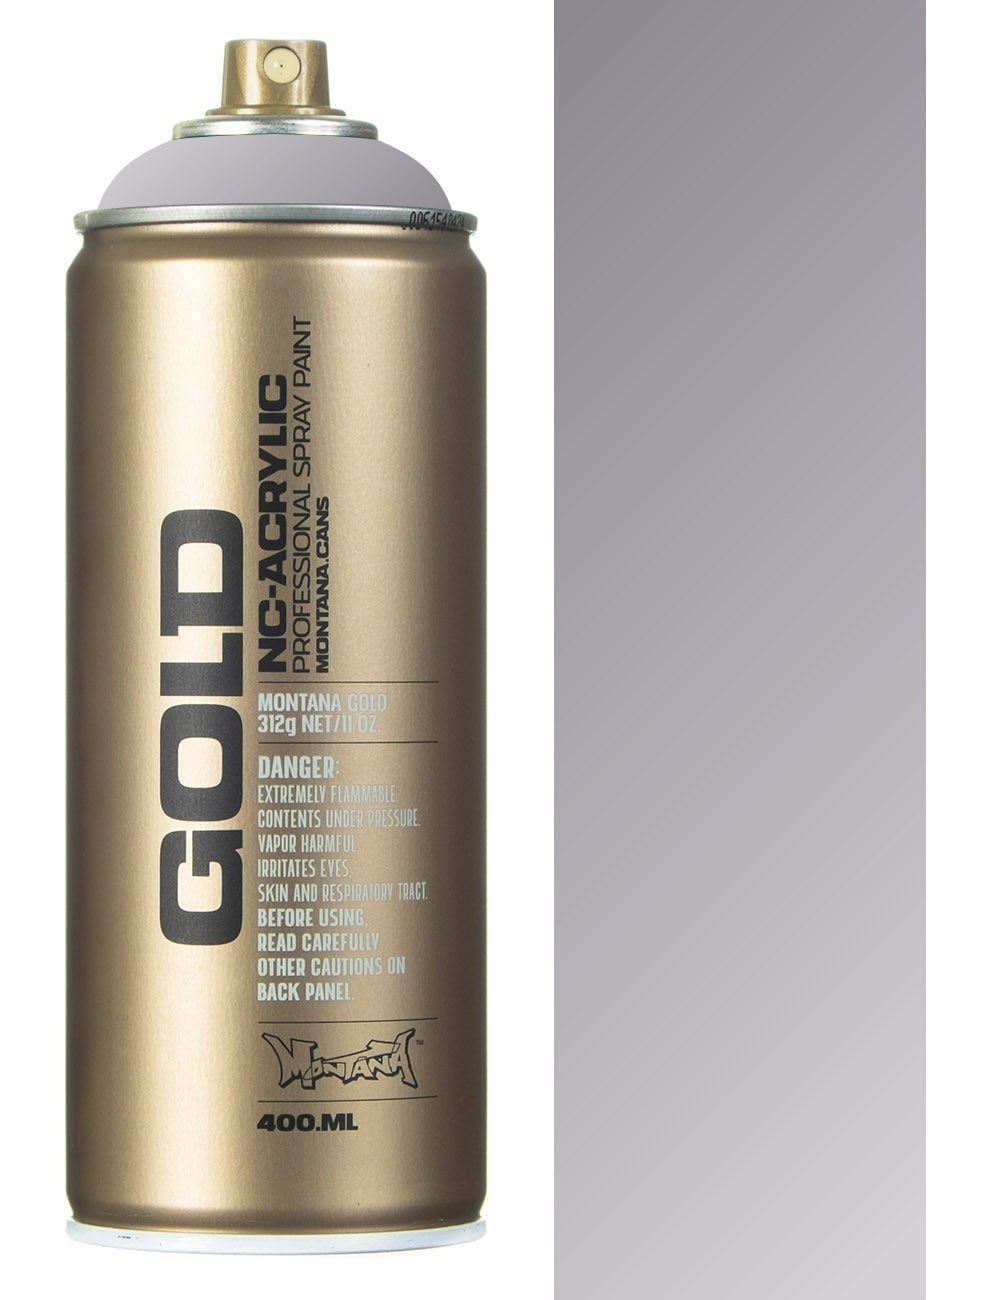 Купить Краска для граффити Montana Gold 400 мл в аэрозоли, серебро, Montana (L&G VERTRIEBS GmbH), Германия